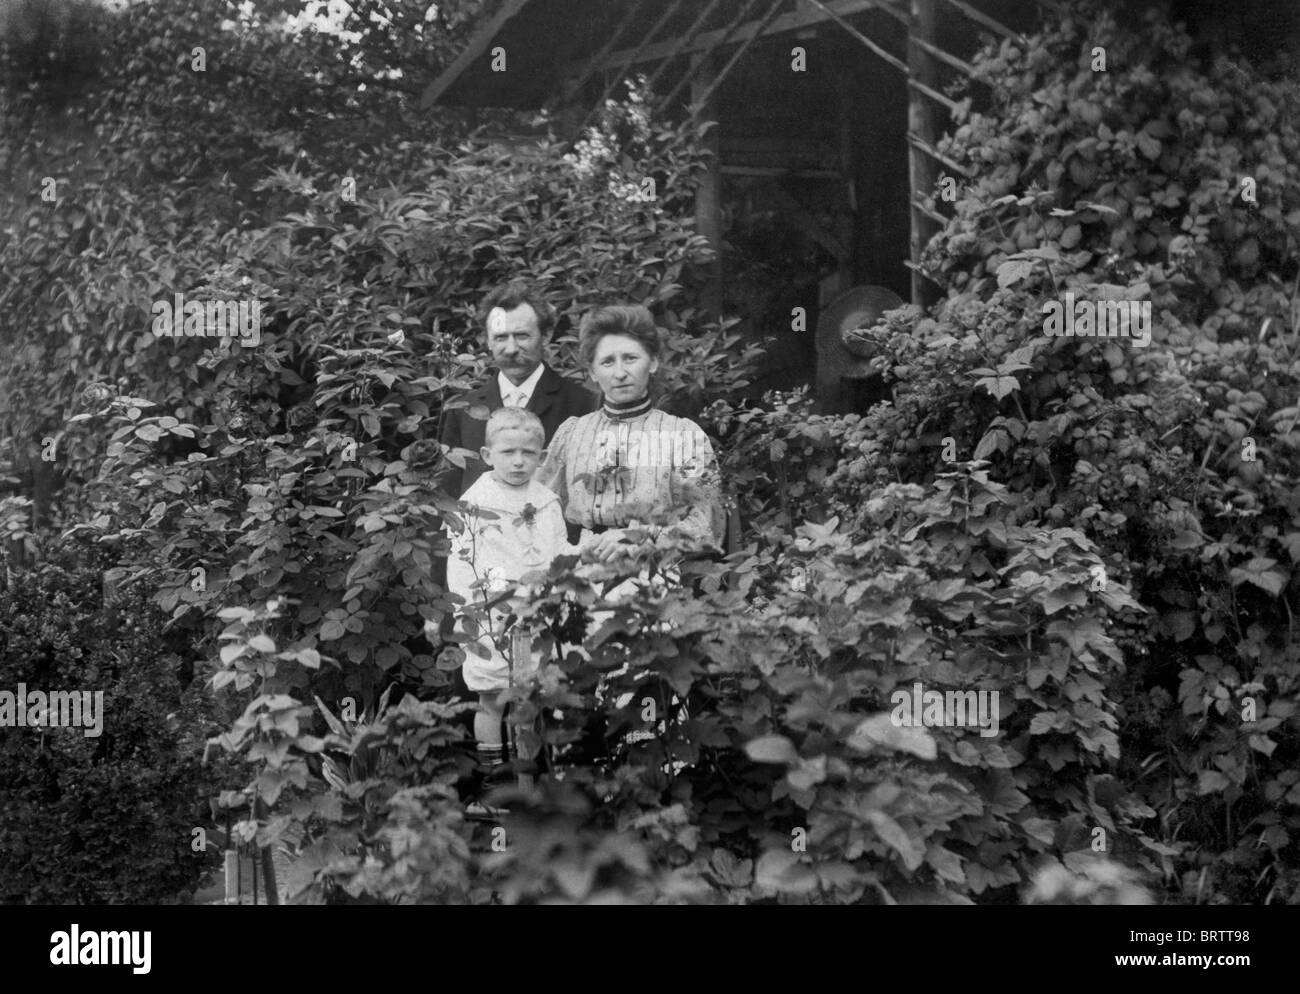 Familia en un jardín, imagen histórica, ca. 1930 Foto de stock